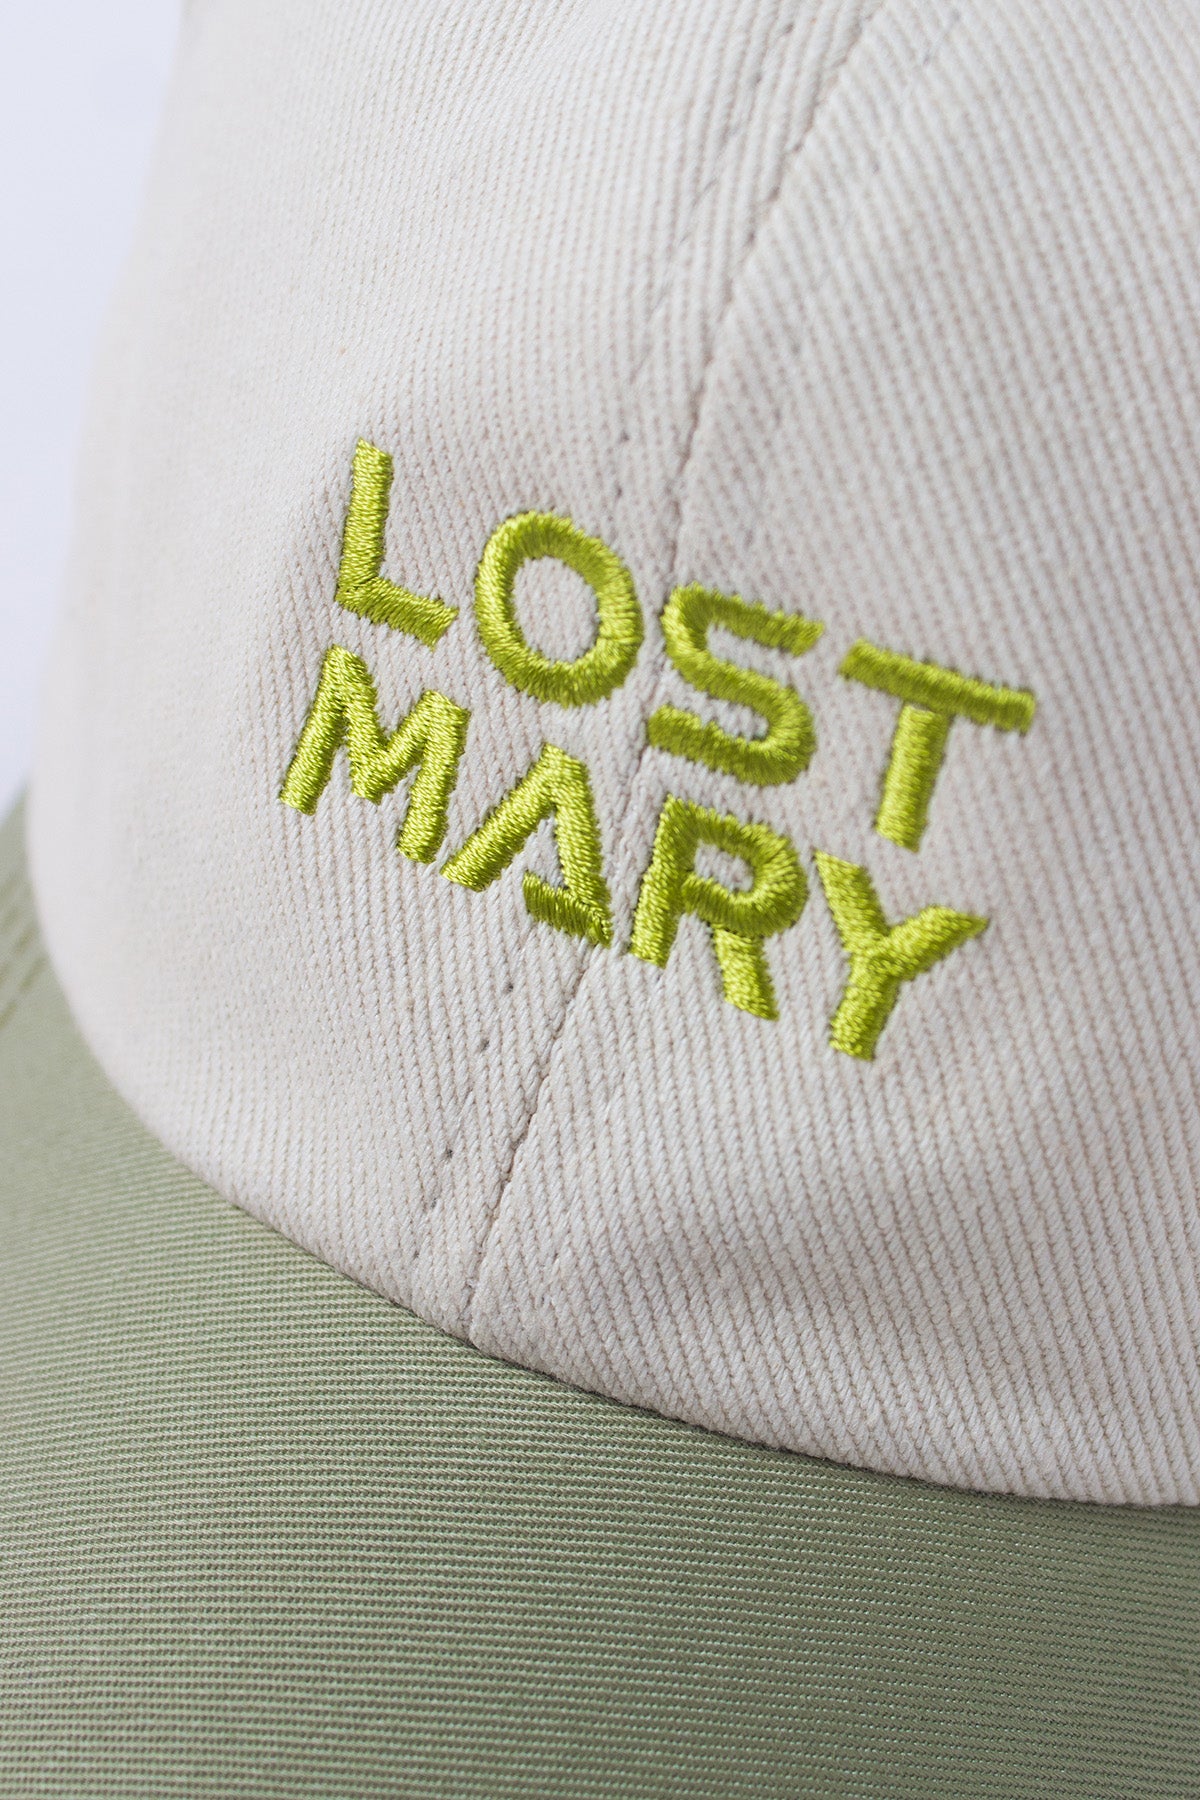 LOST MARY Solero Lime 6 Panel Cap Beige